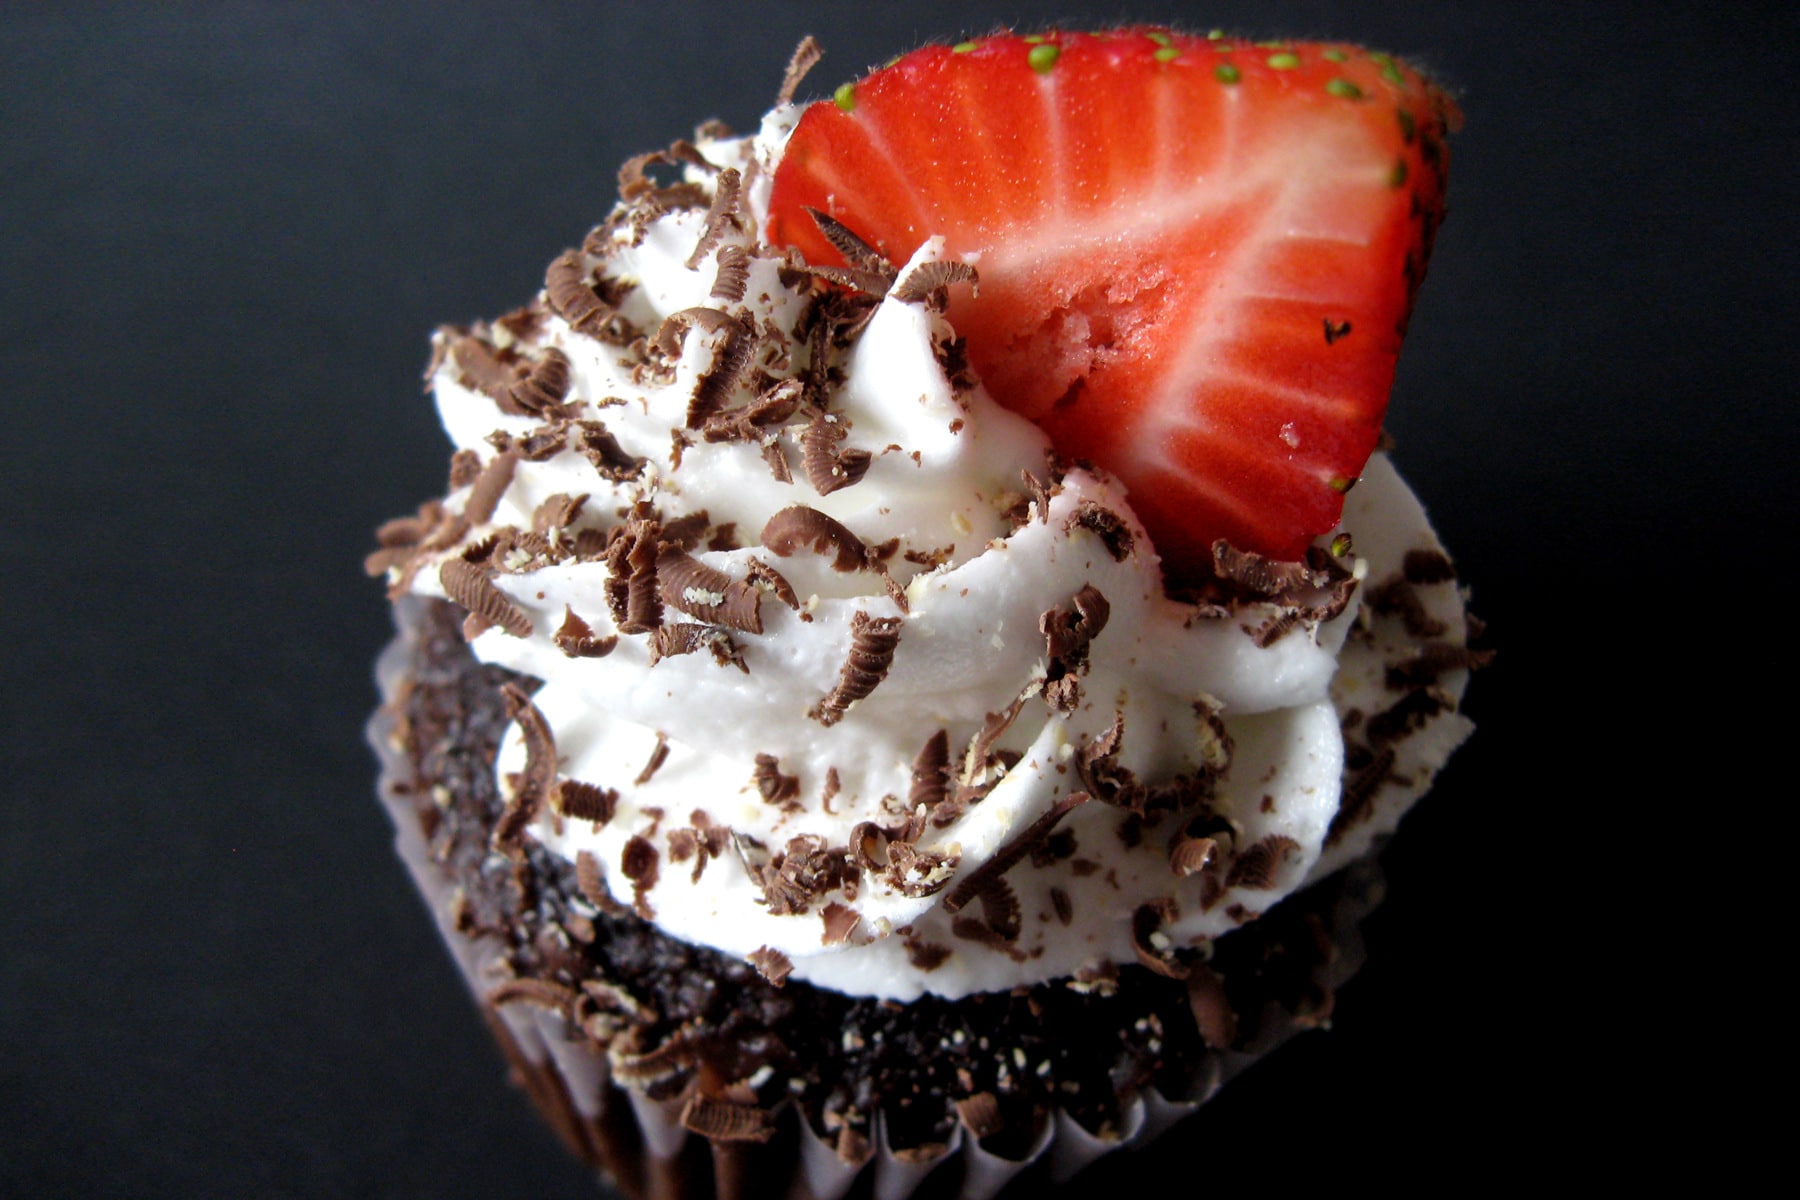 strawberry chocolate cupcake